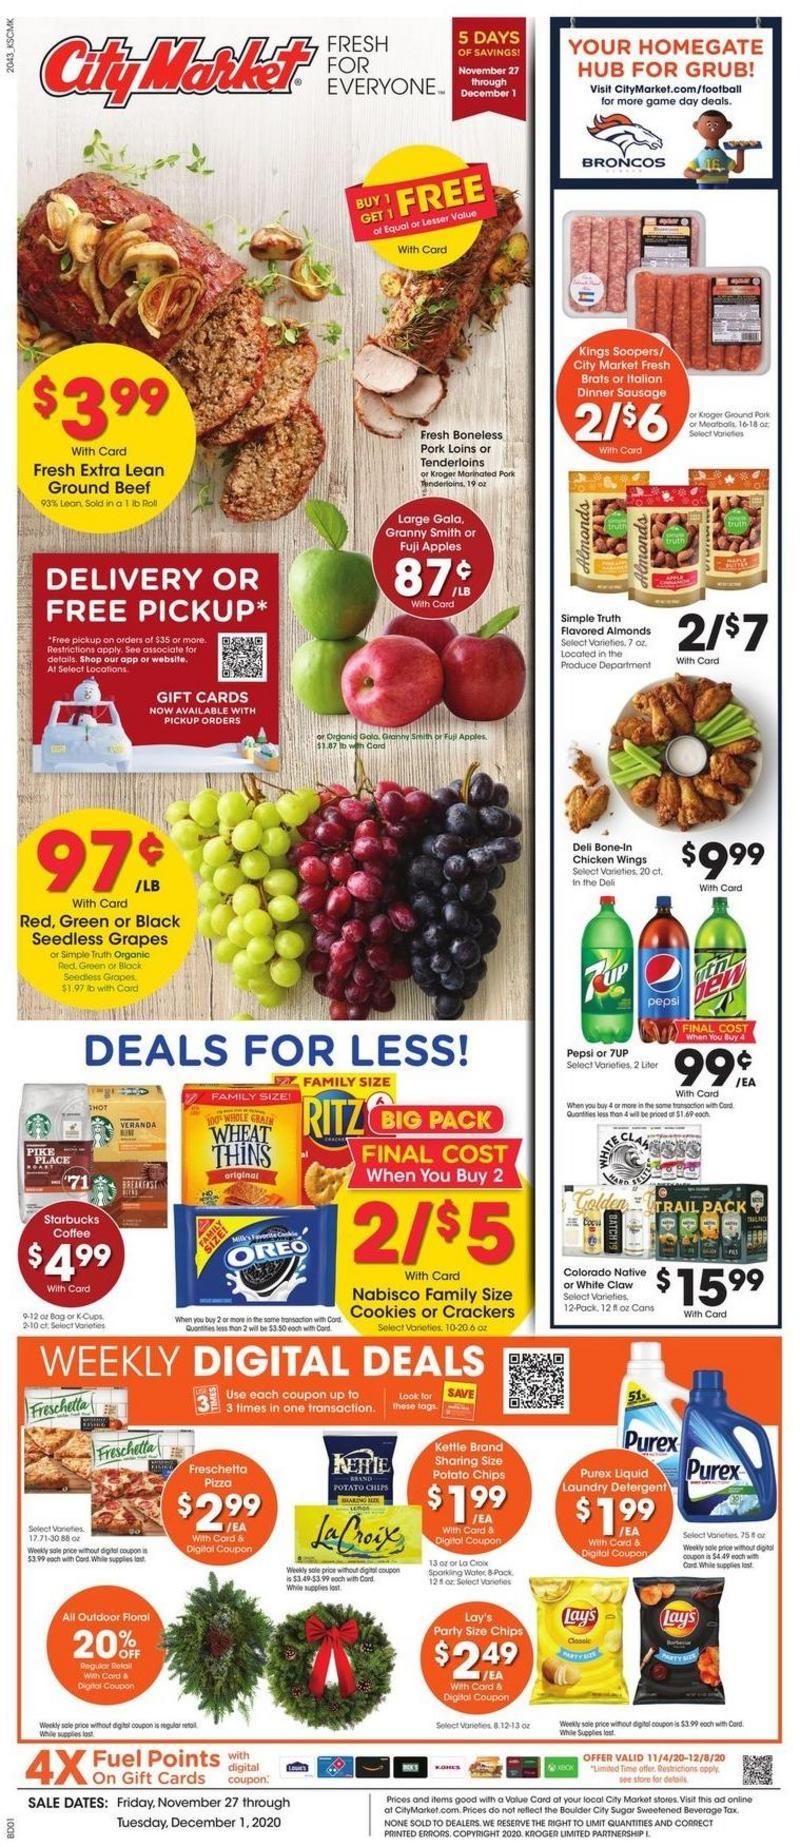 City Market Weekly Ad from November 27